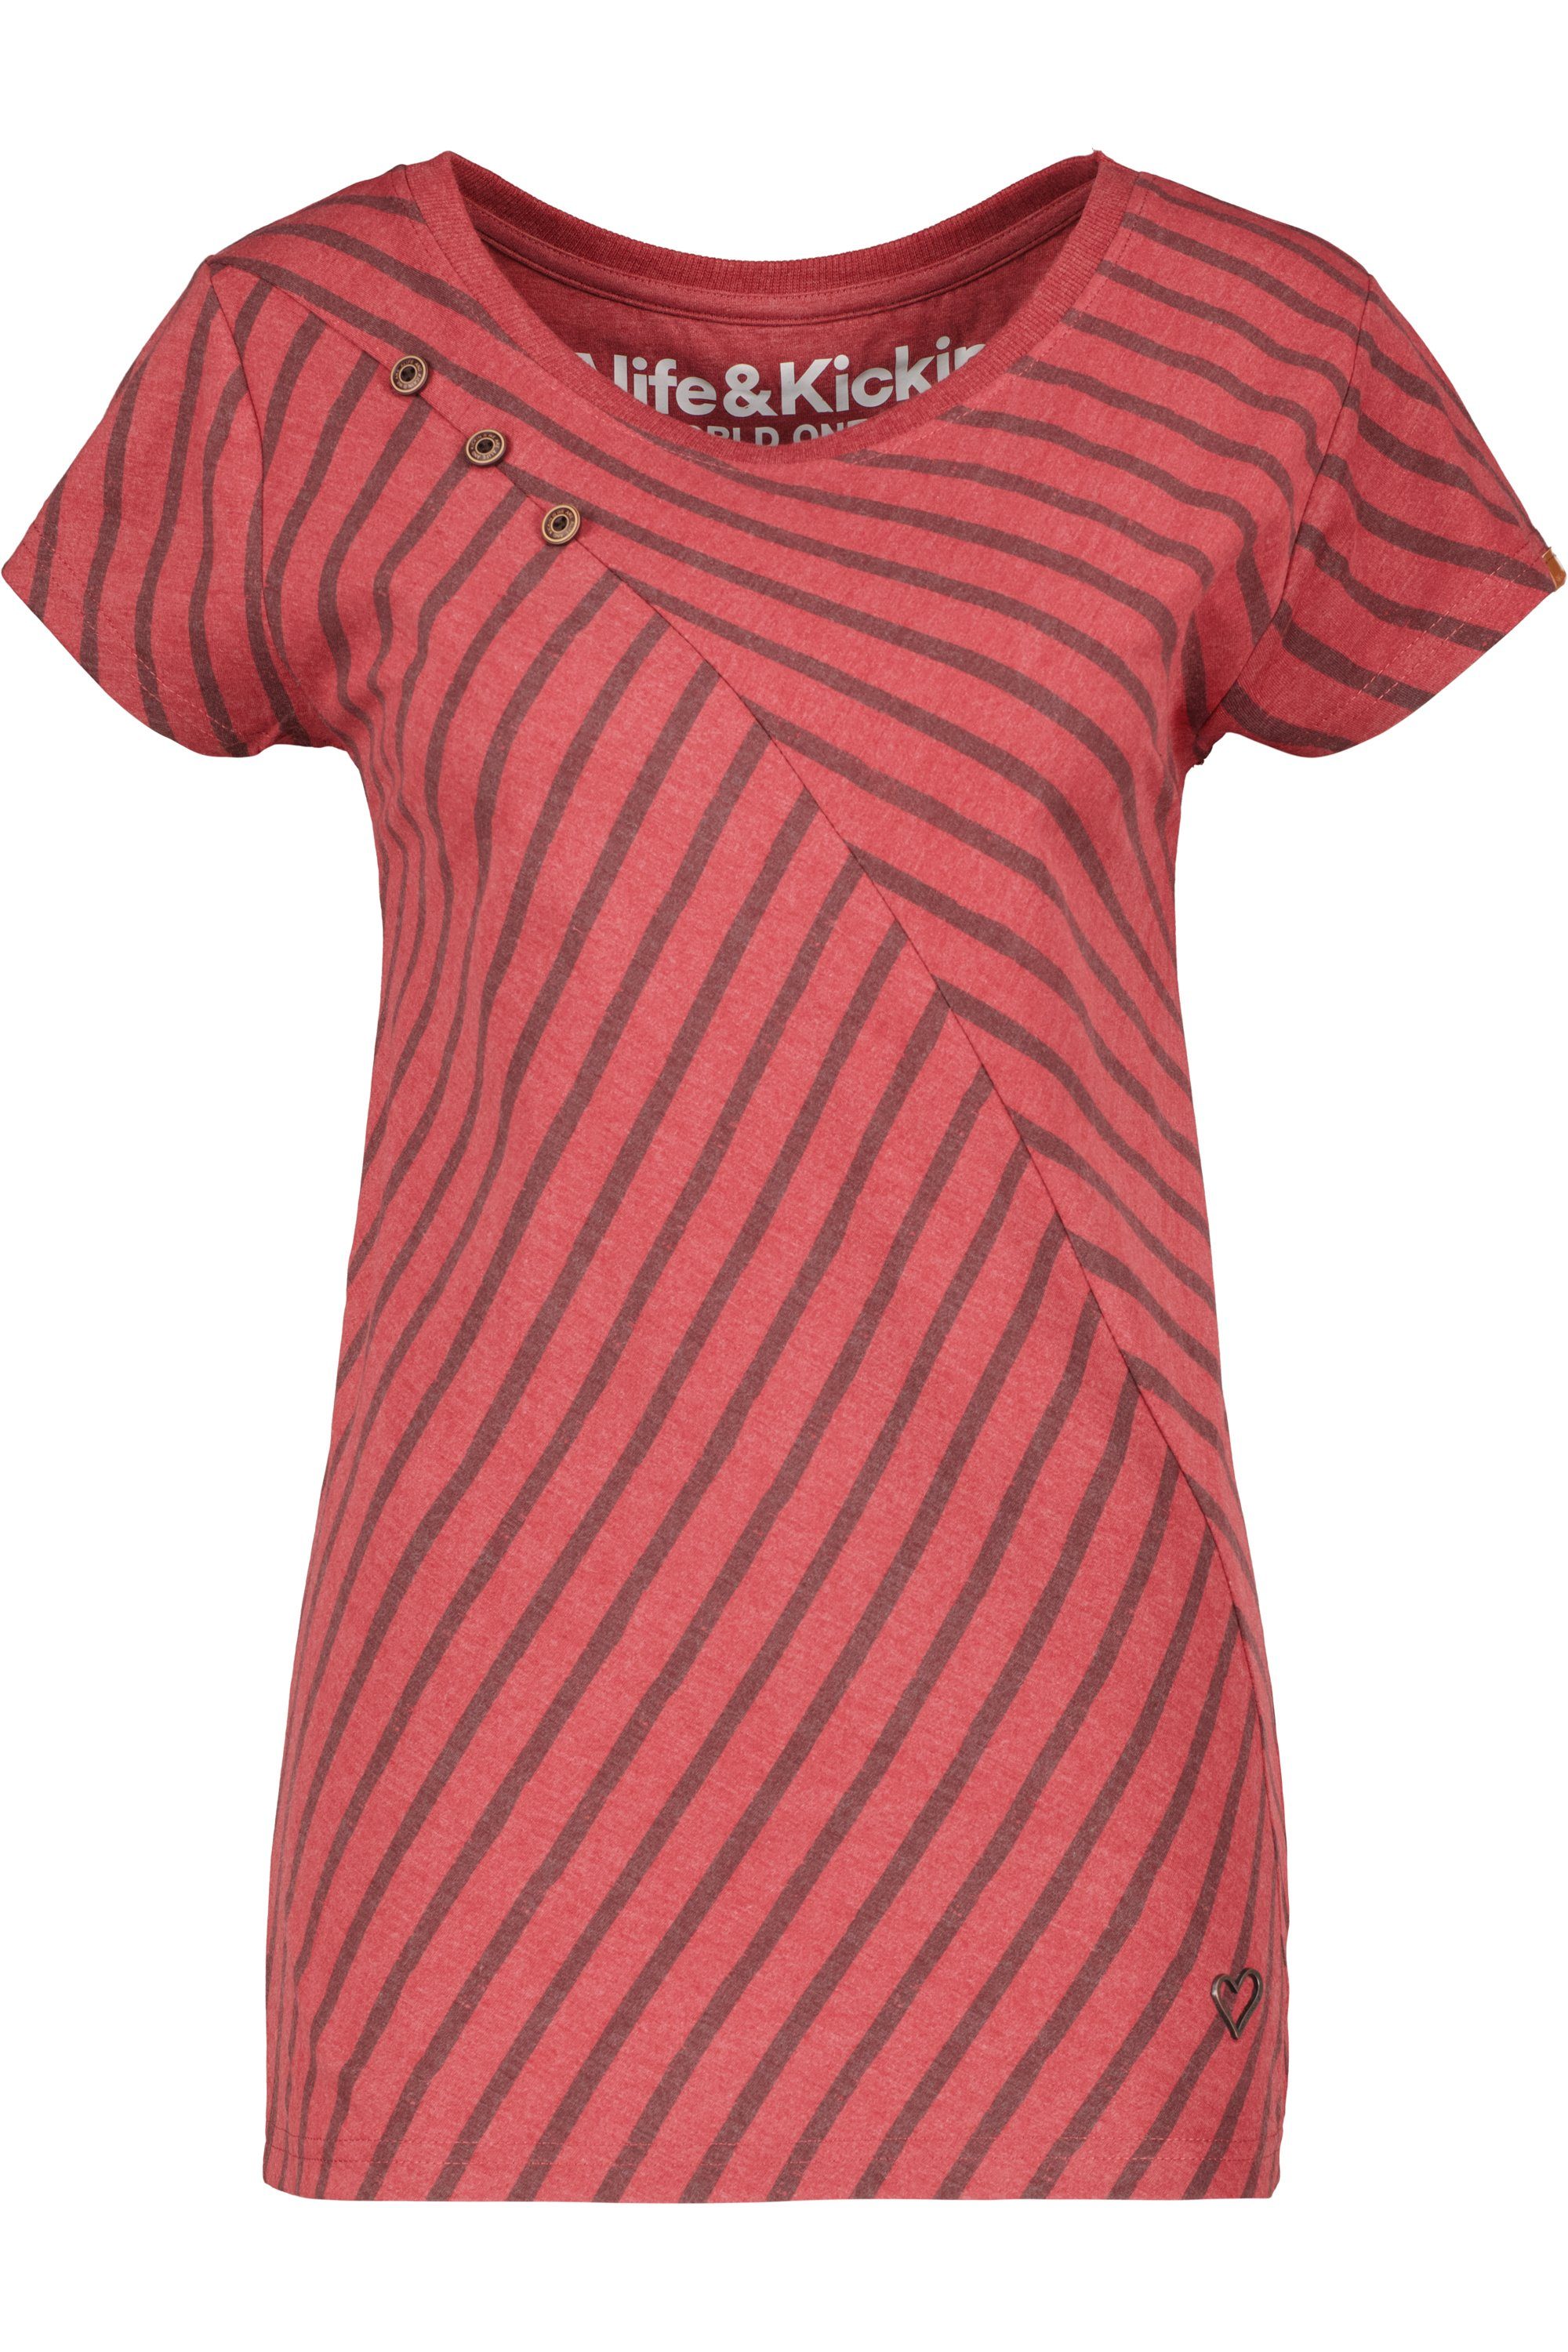 Damen melange ZoeAK Shirt cranberry Alife Rundhalsshirt Kickin & Z Shirt